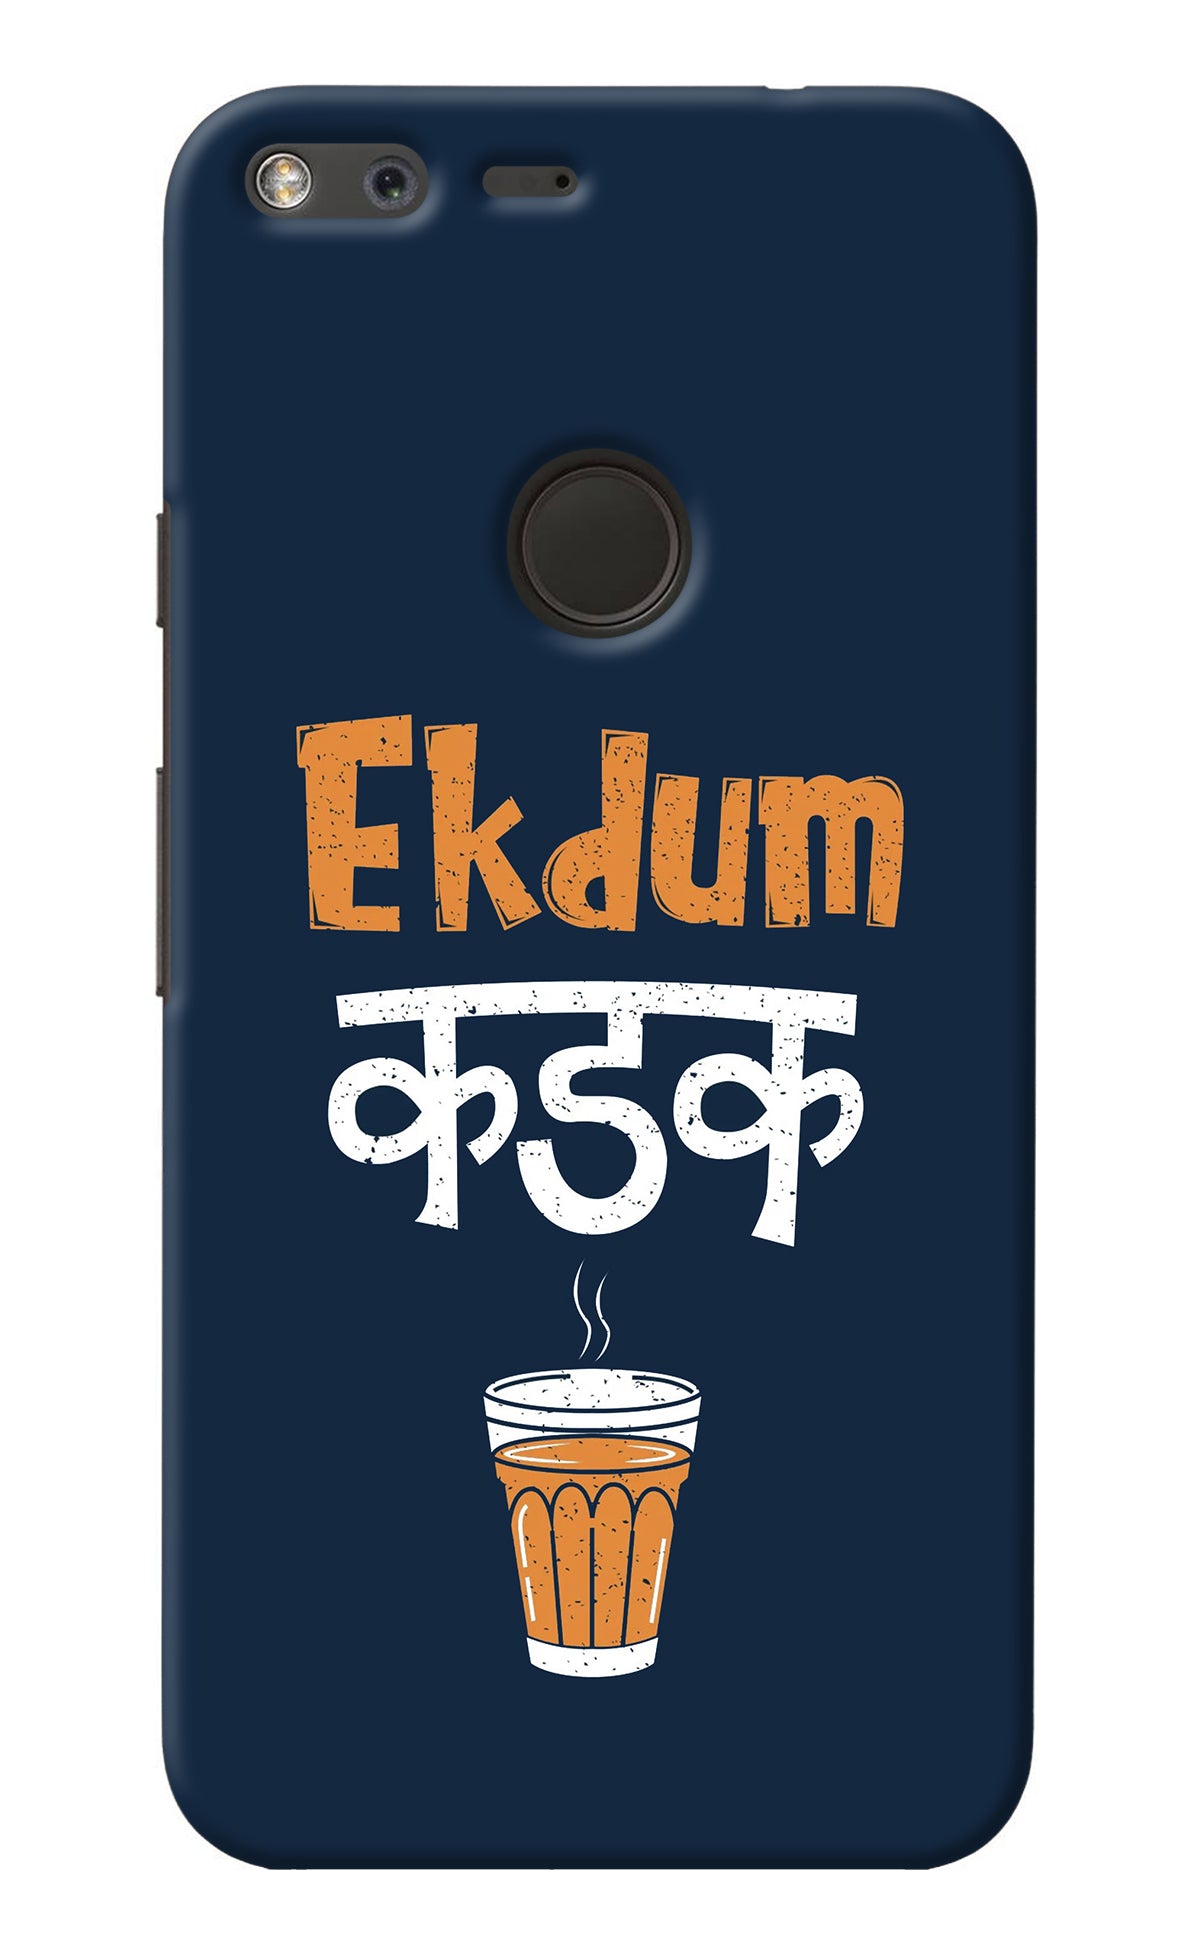 Ekdum Kadak Chai Google Pixel Back Cover